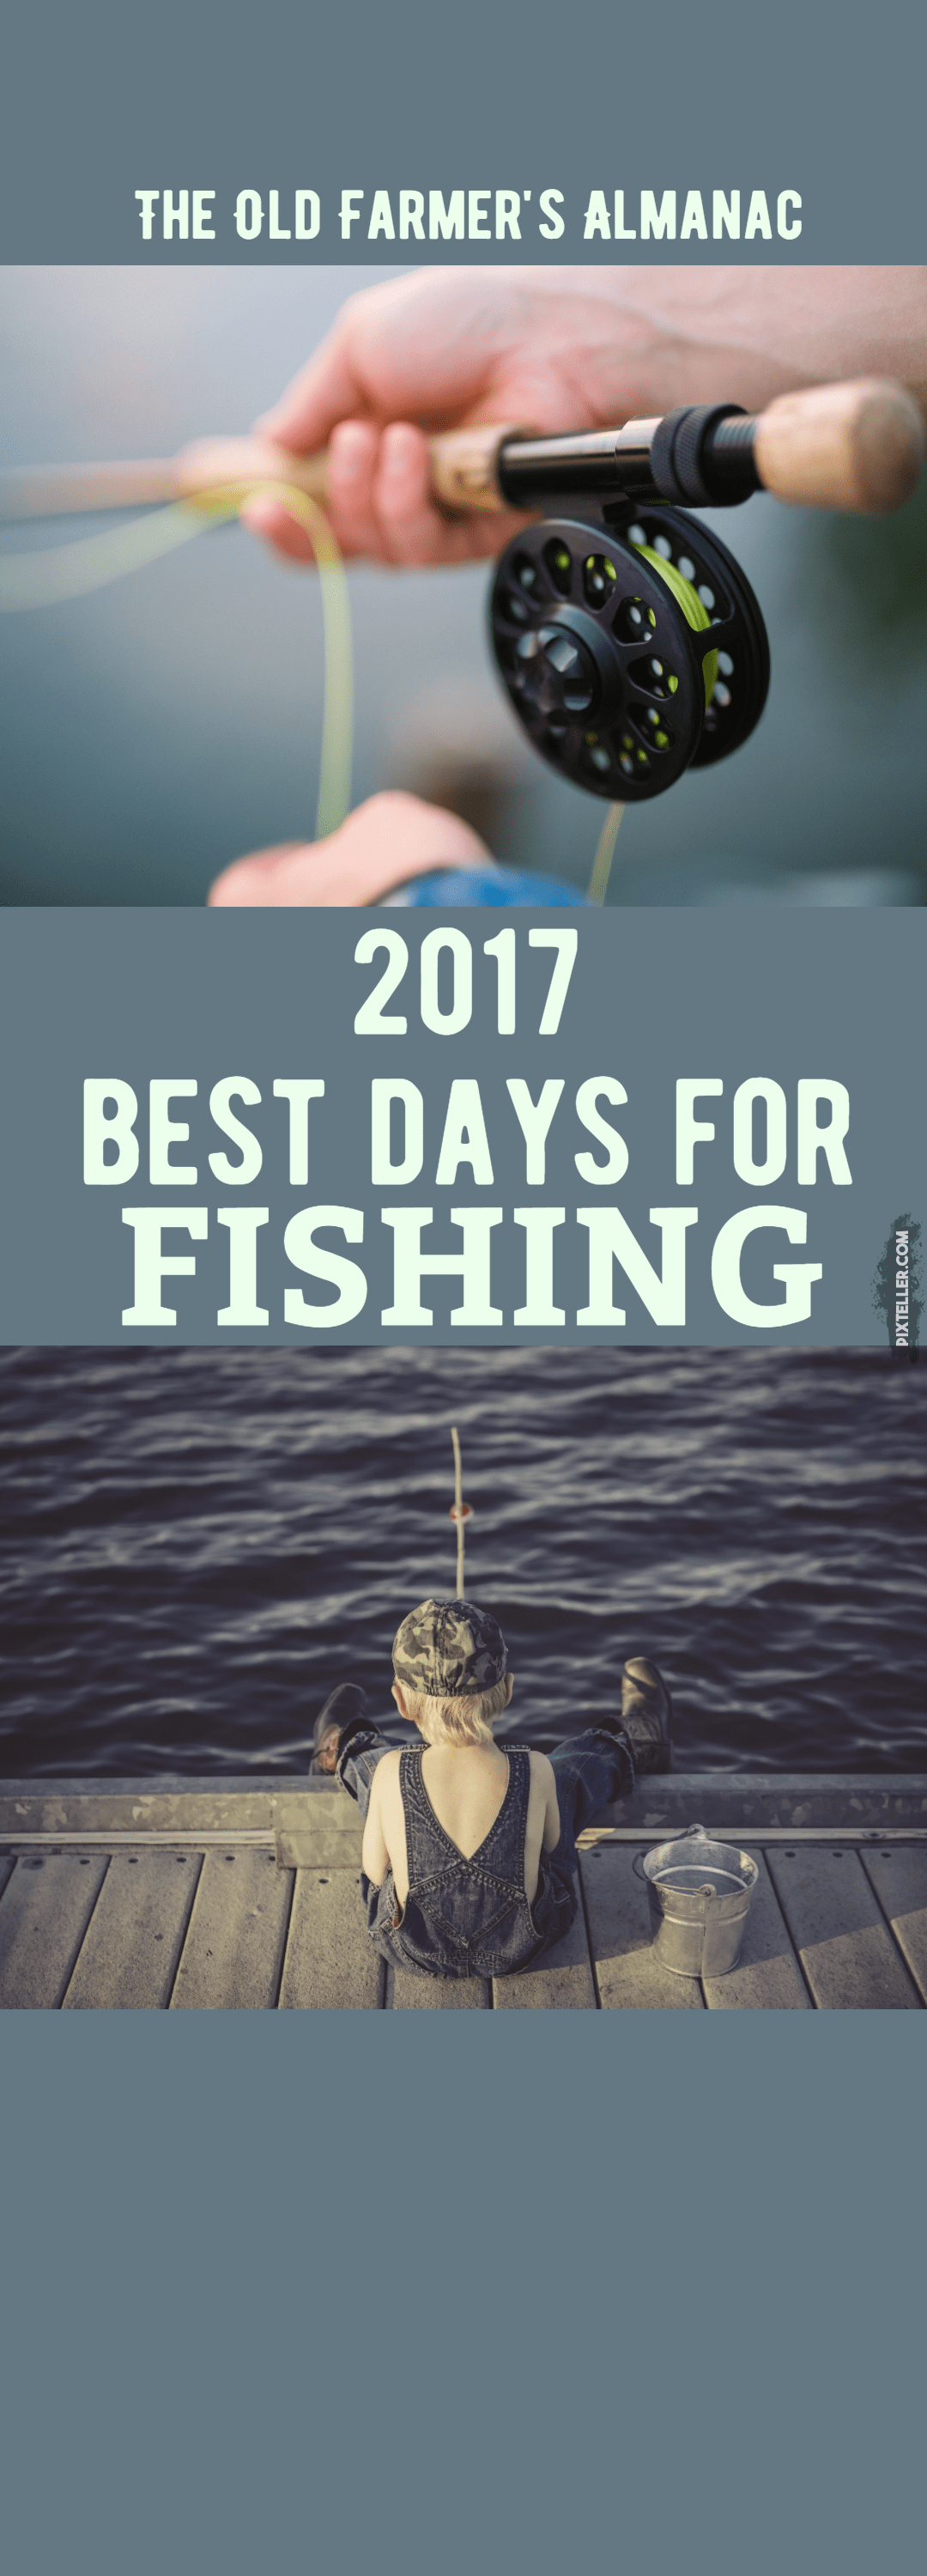 OFA 4-7-17 BEST DAY FISHING Design 